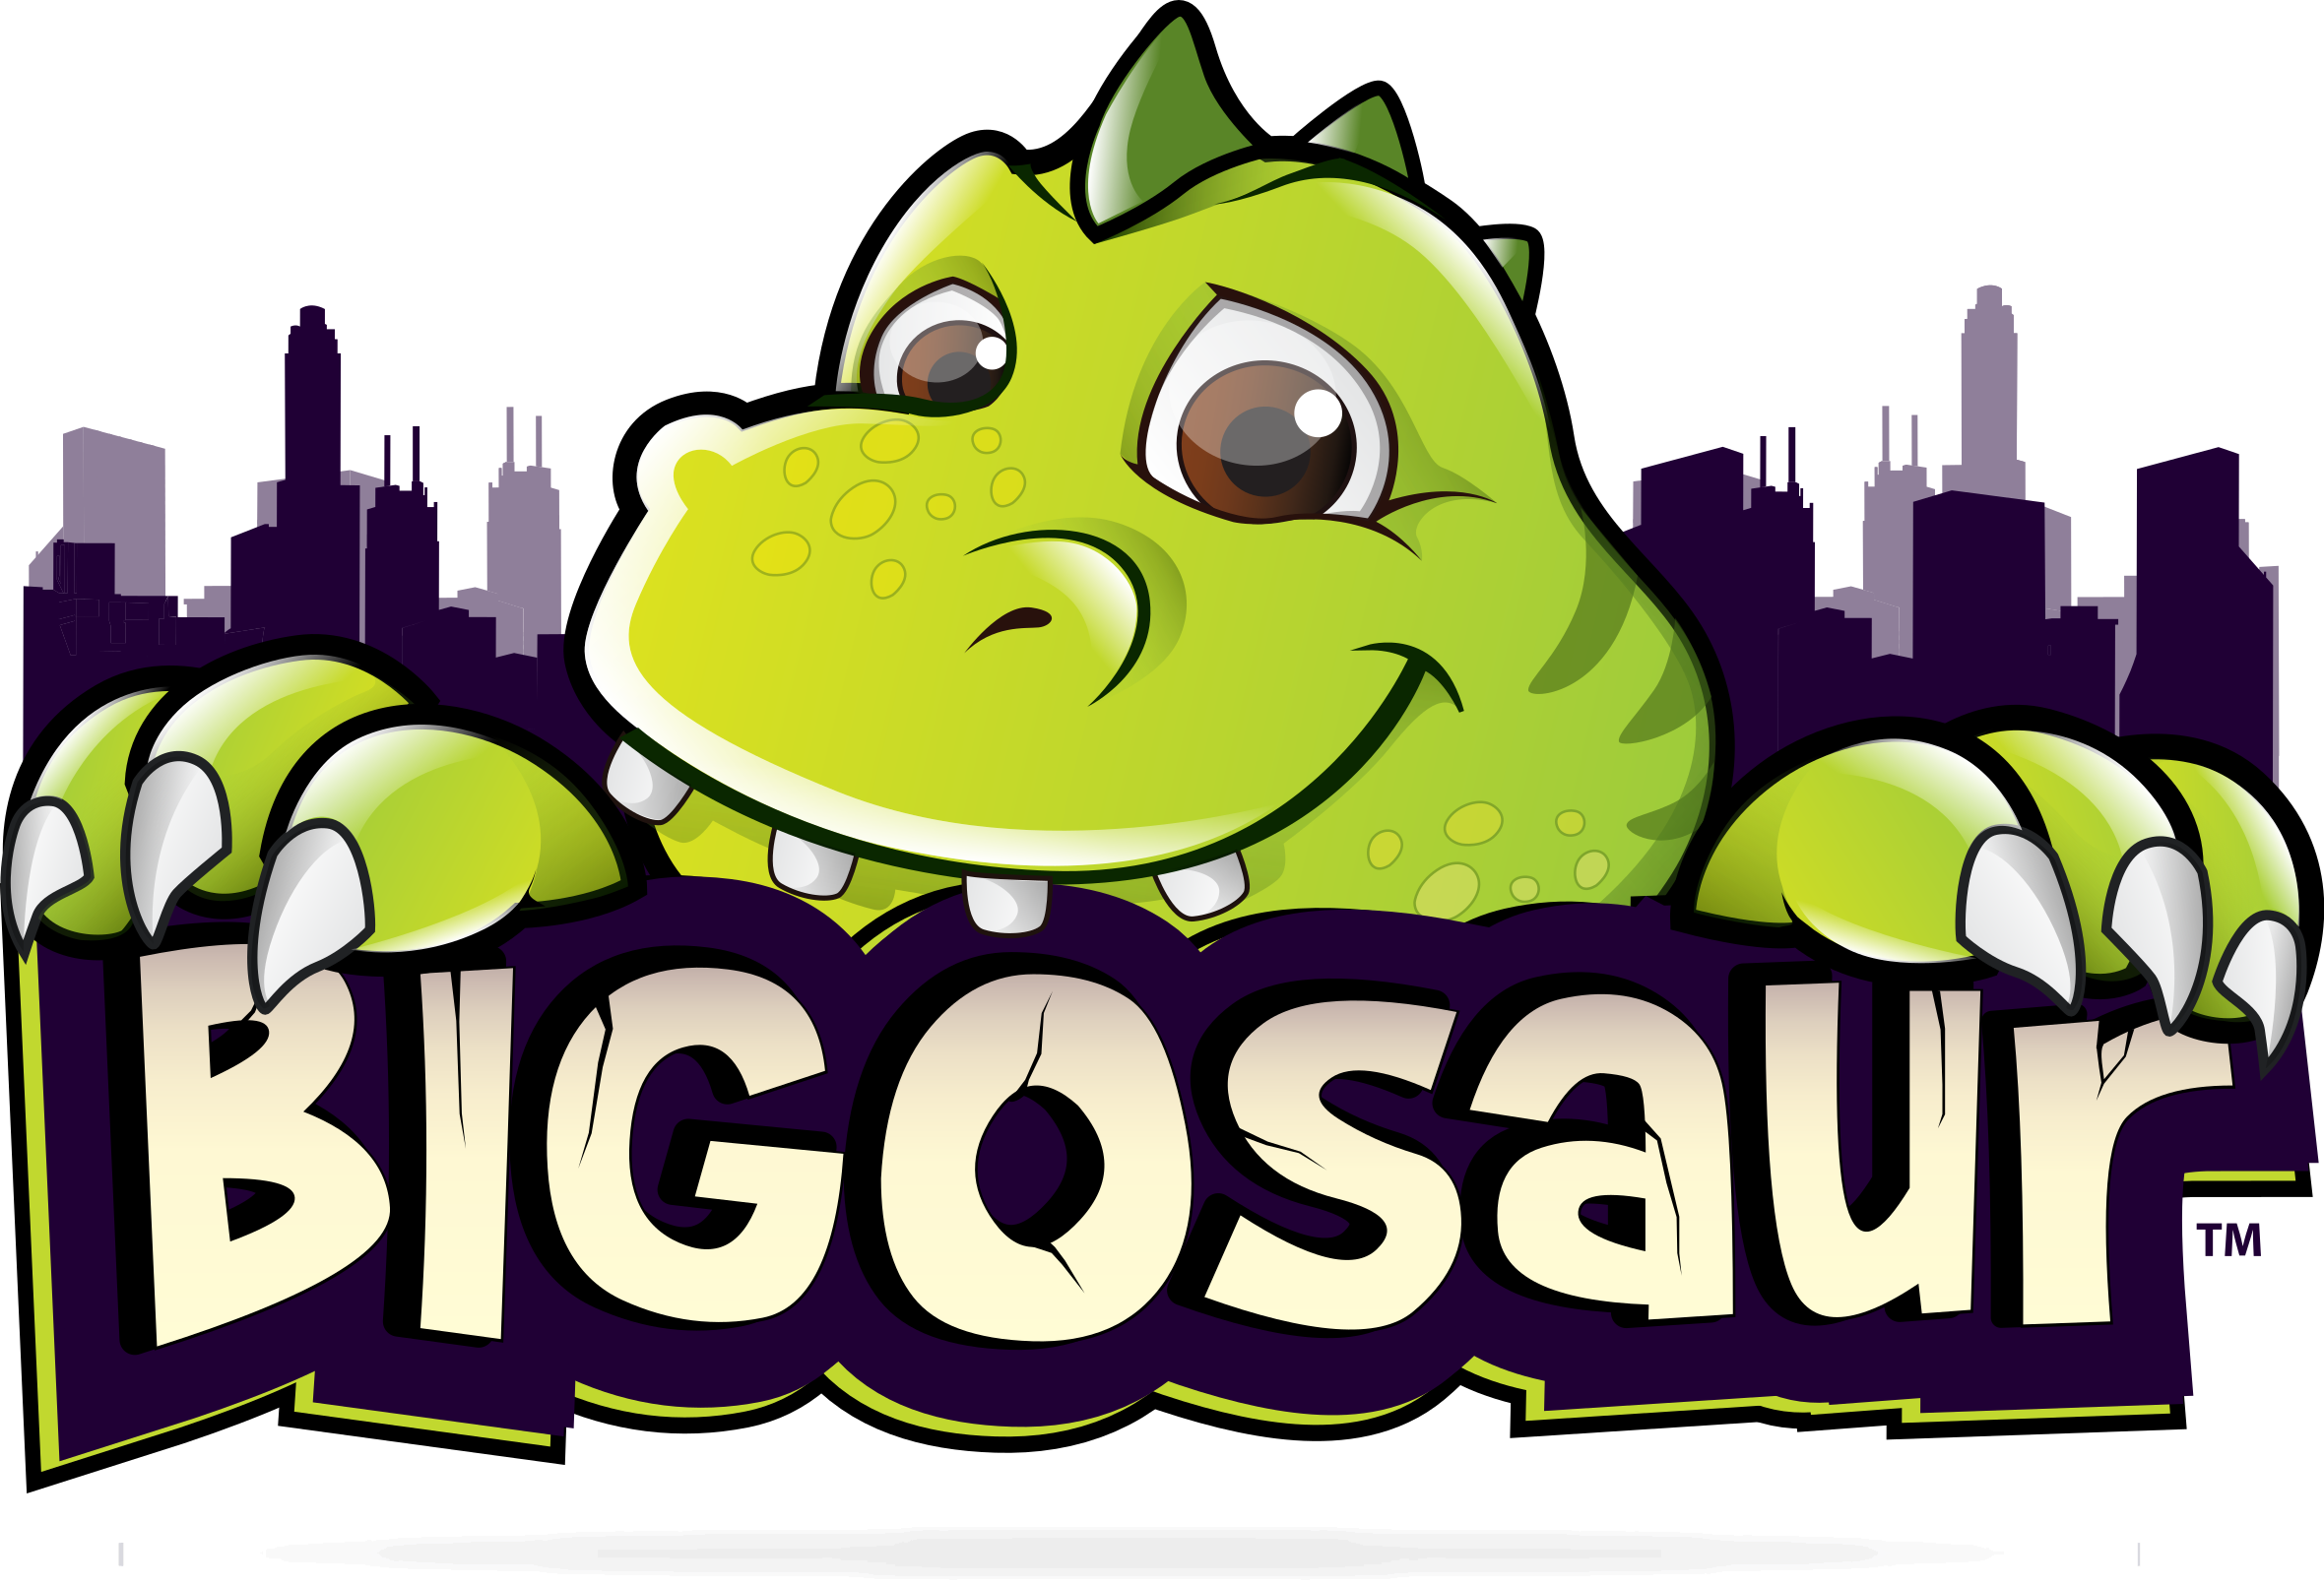 Bigosaur